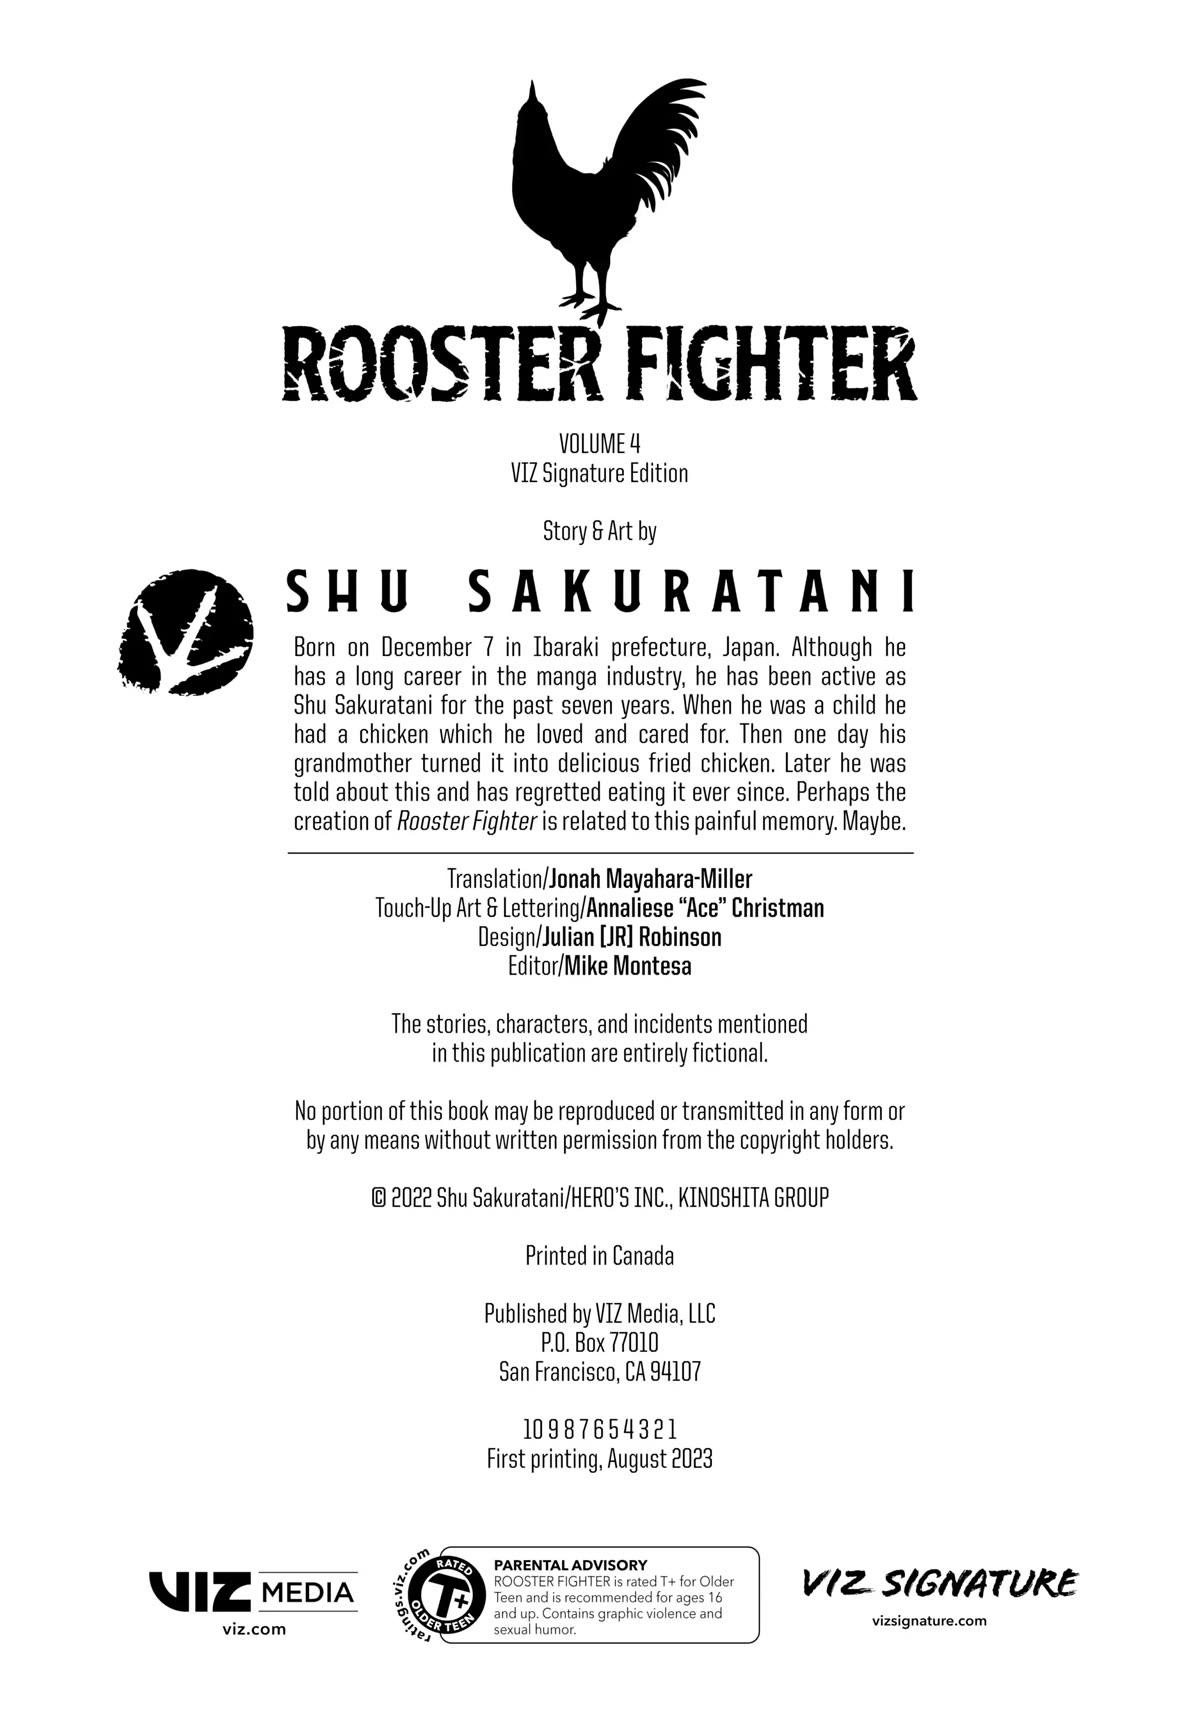 VIZ  The Official Website for Rooster Fighter